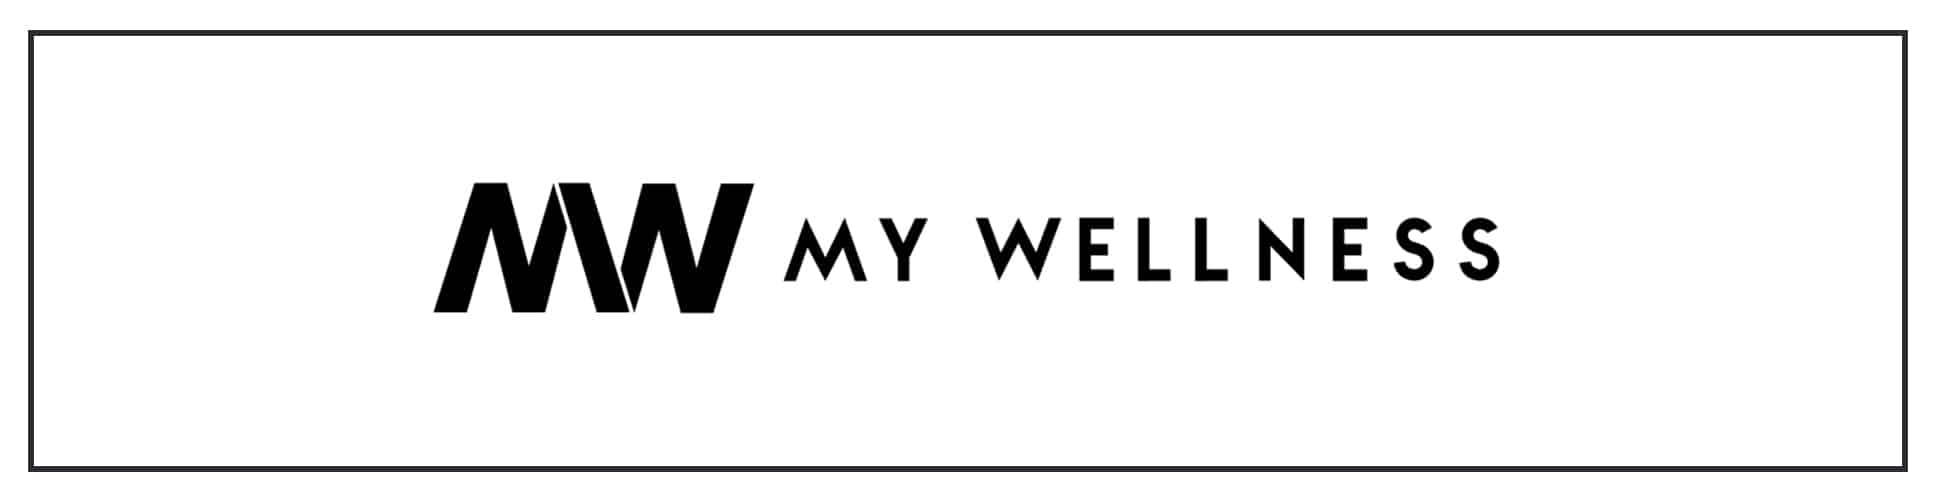 My wellness logo on a white background.